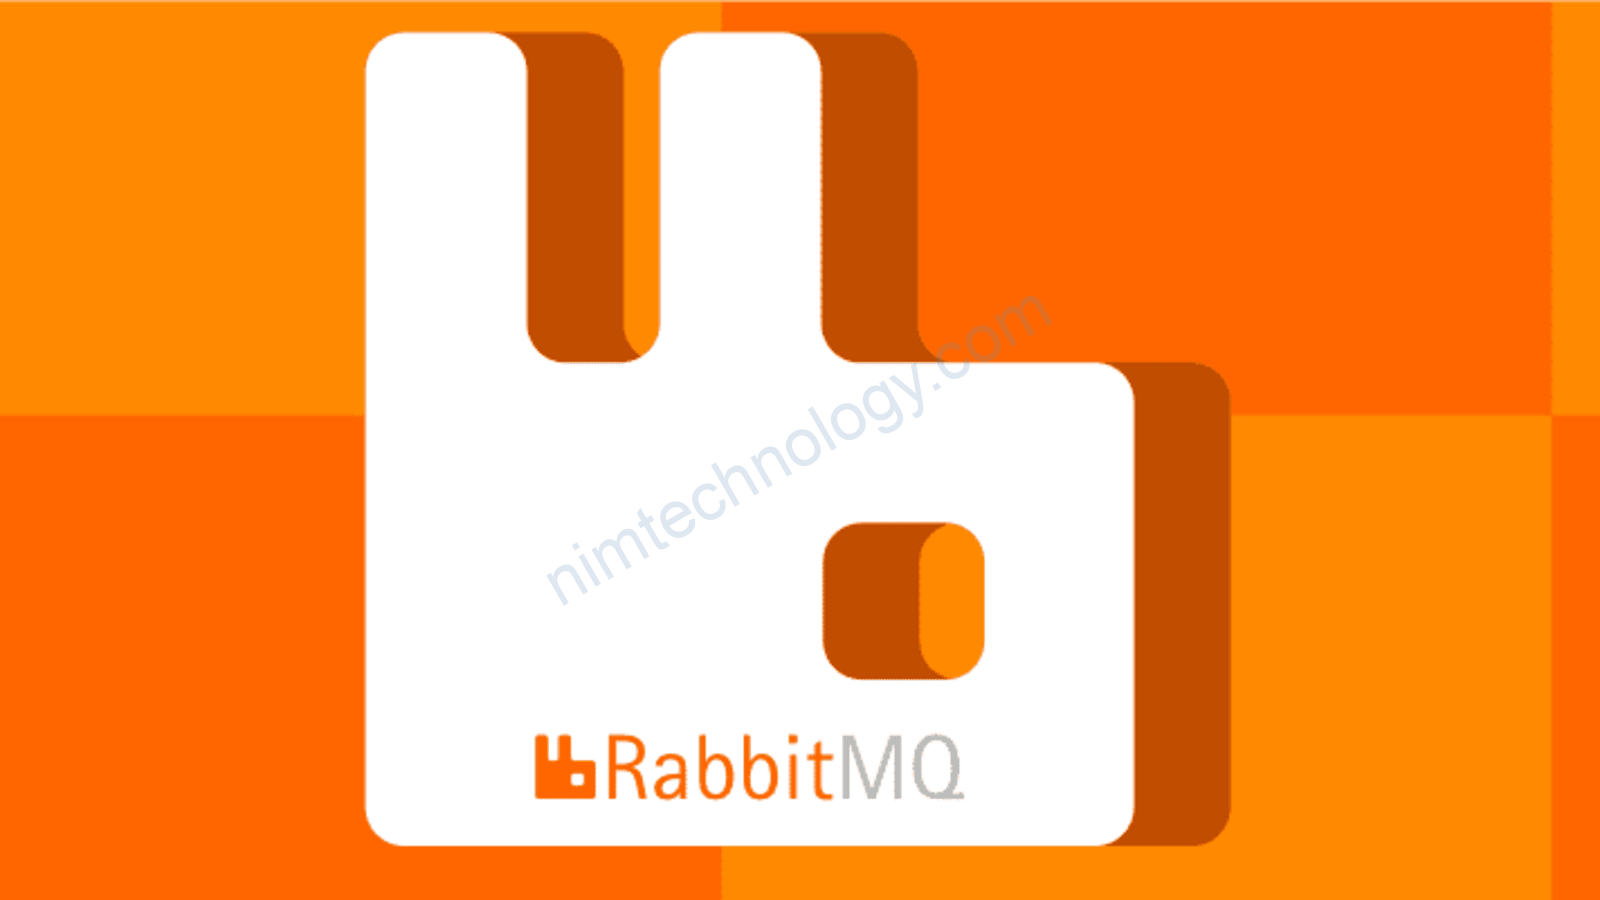 [RabbitMQ] Installing RabbitMQ by Docker and Run RabbitMQ commands